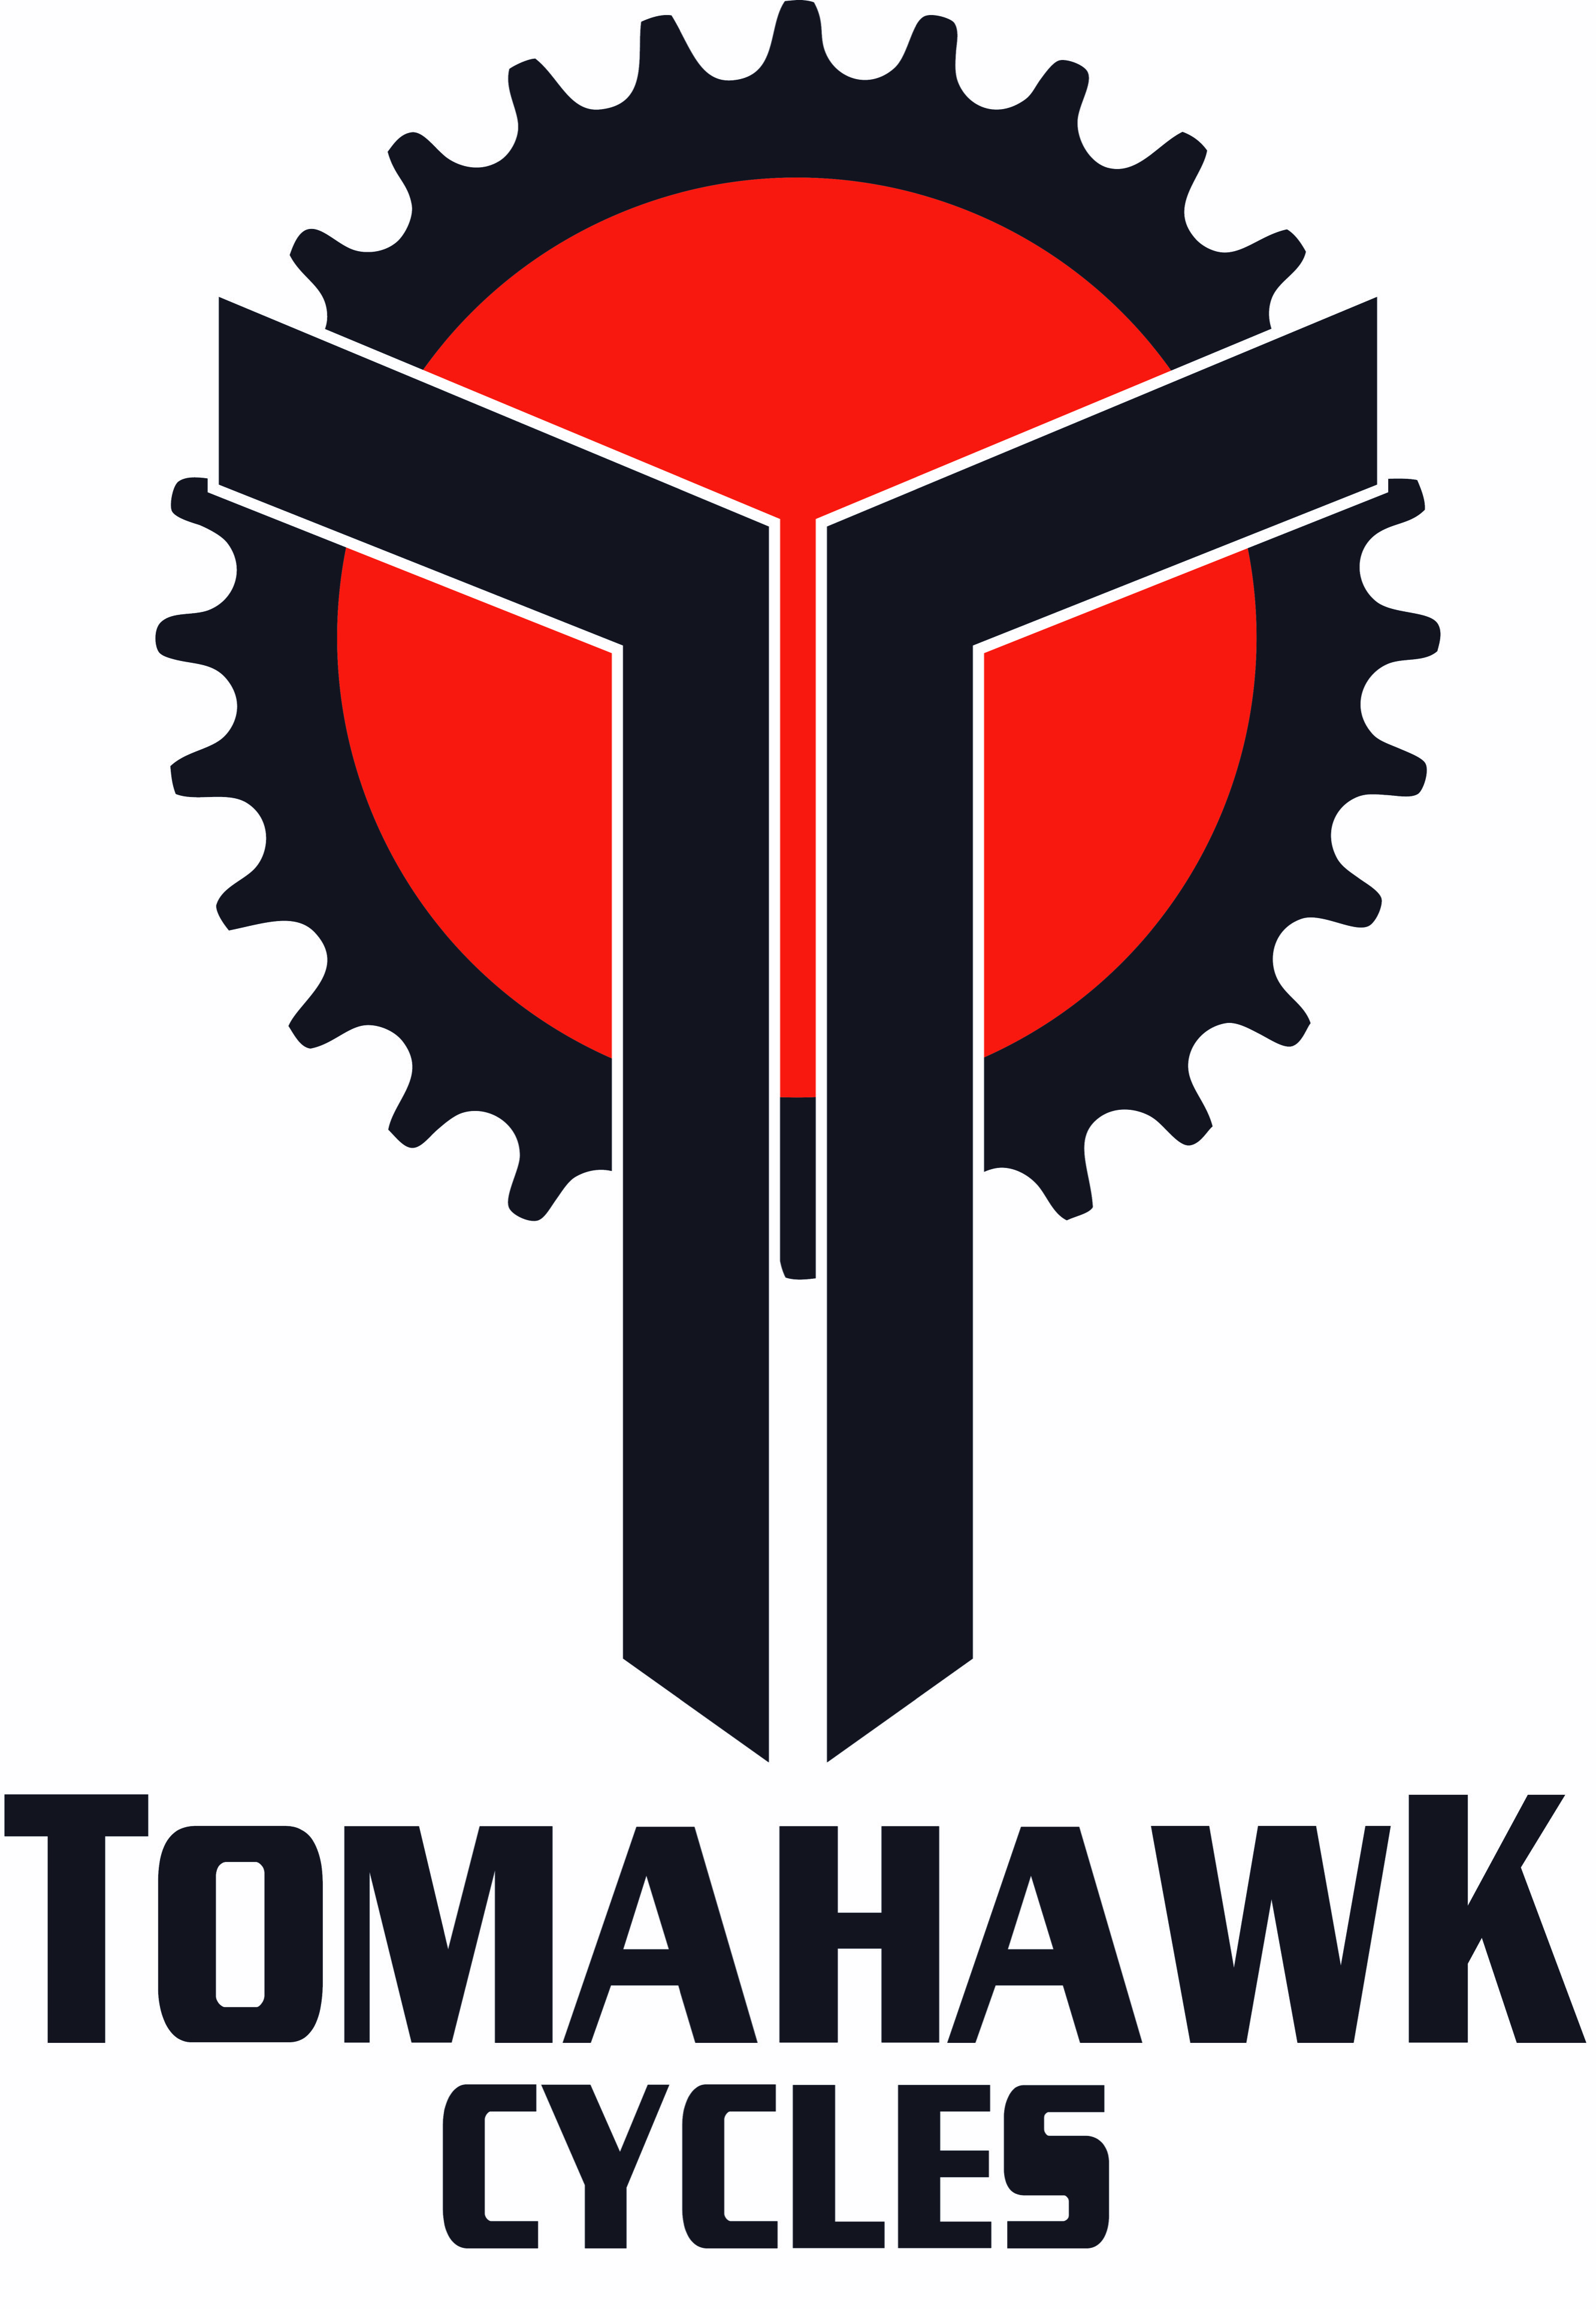 Tomahawk Cycles